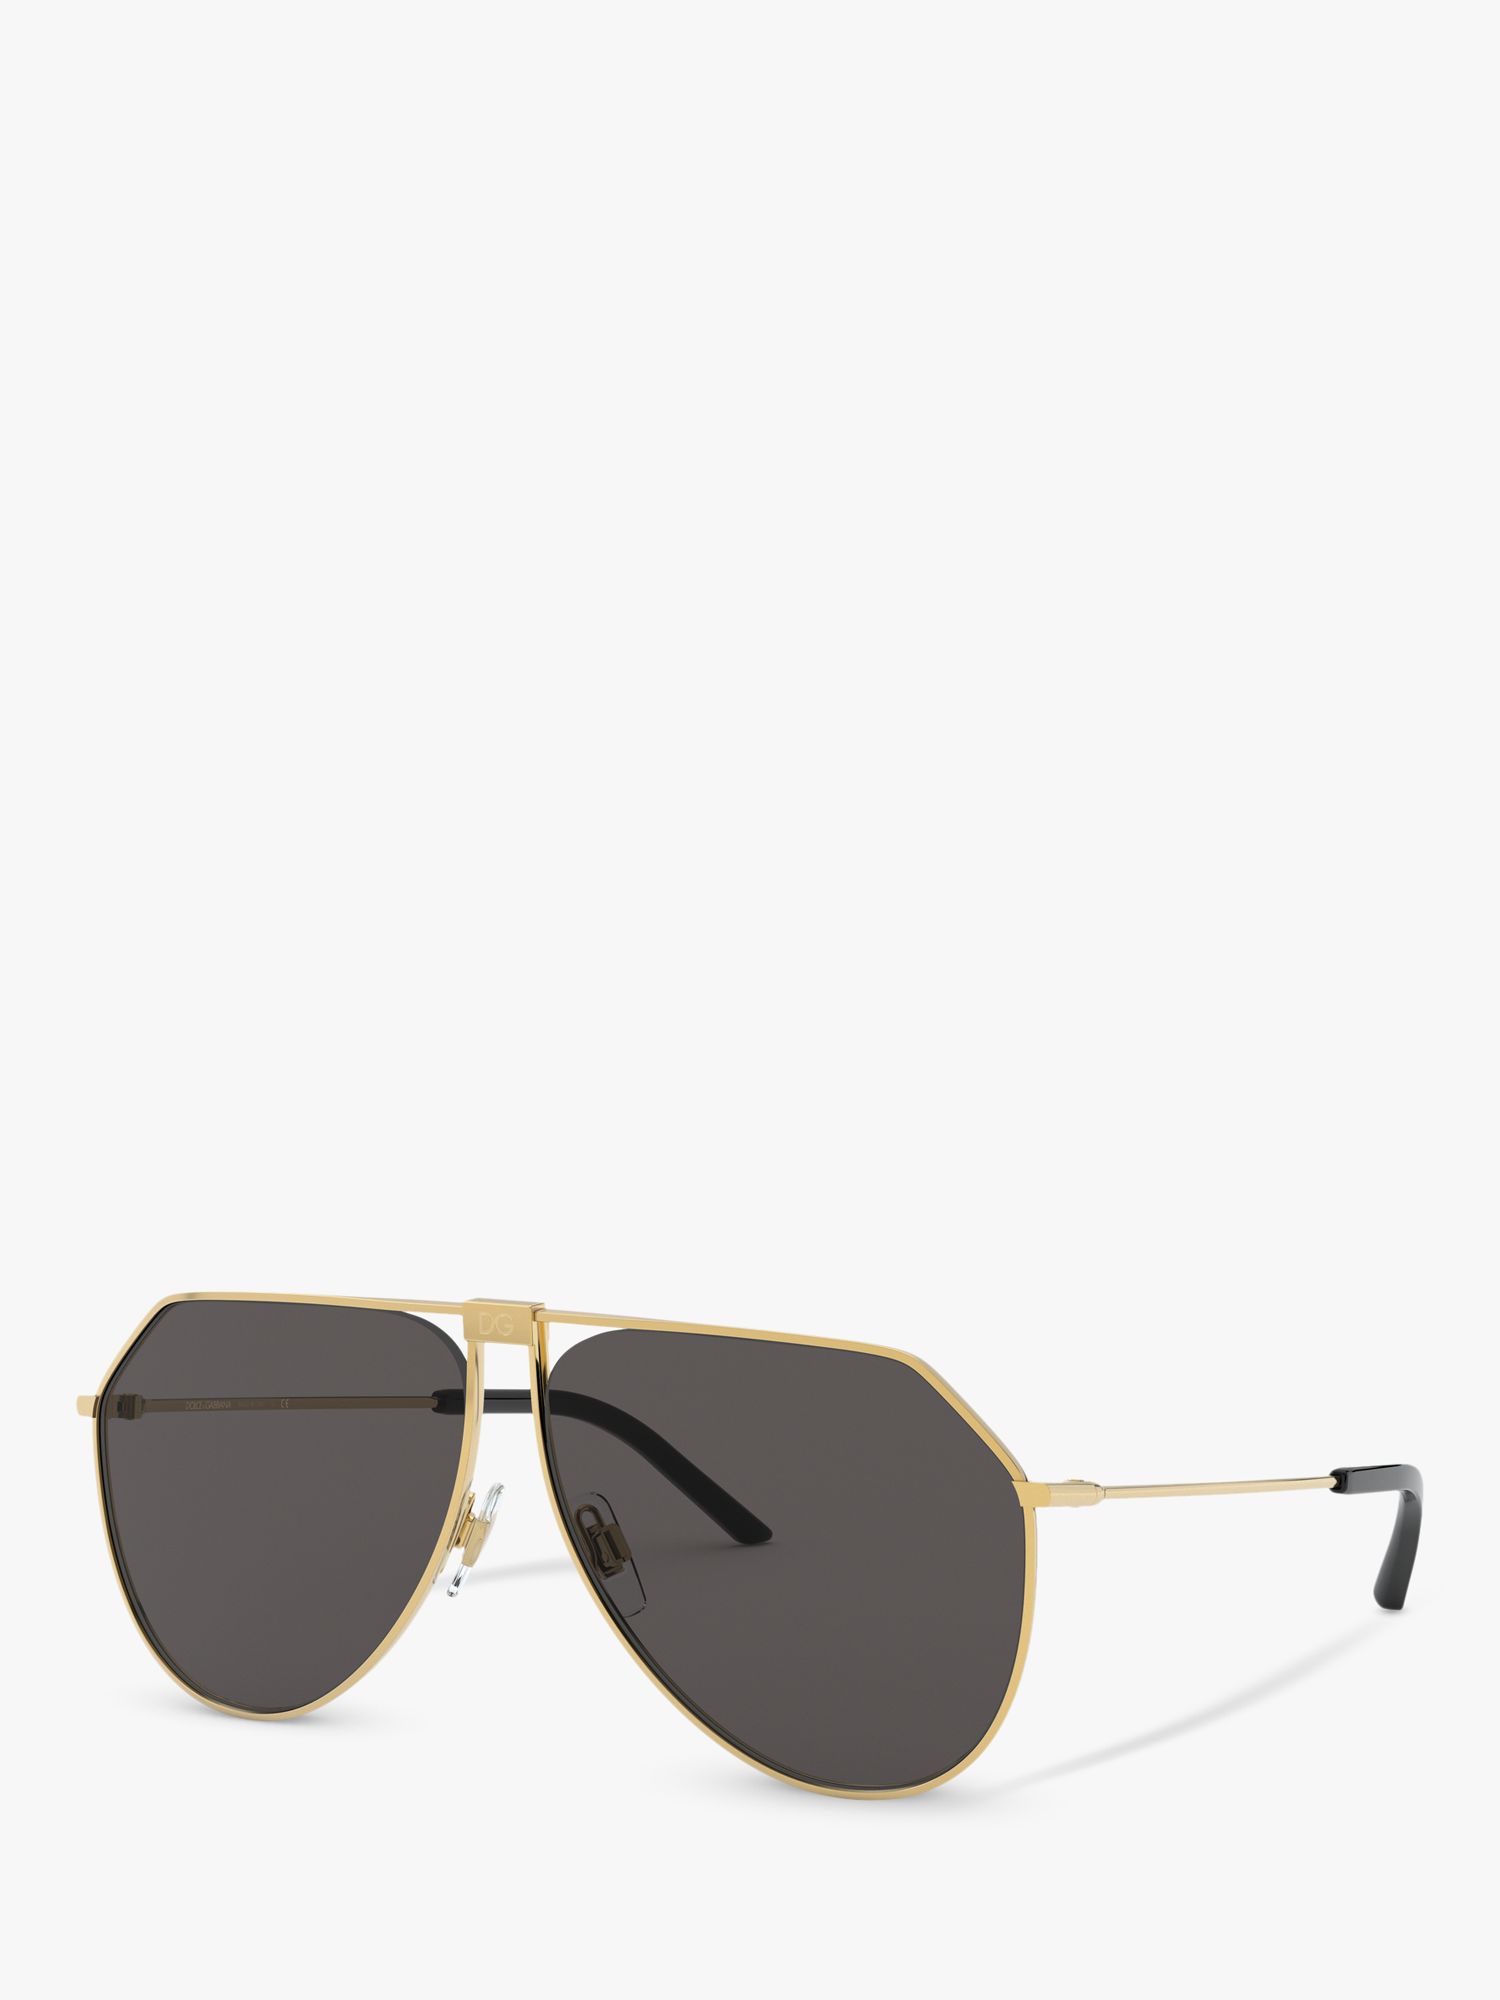 Dolce Gabbana DG2248 Men's Sunglasses, Gold/Grey at John Lewis & Partners